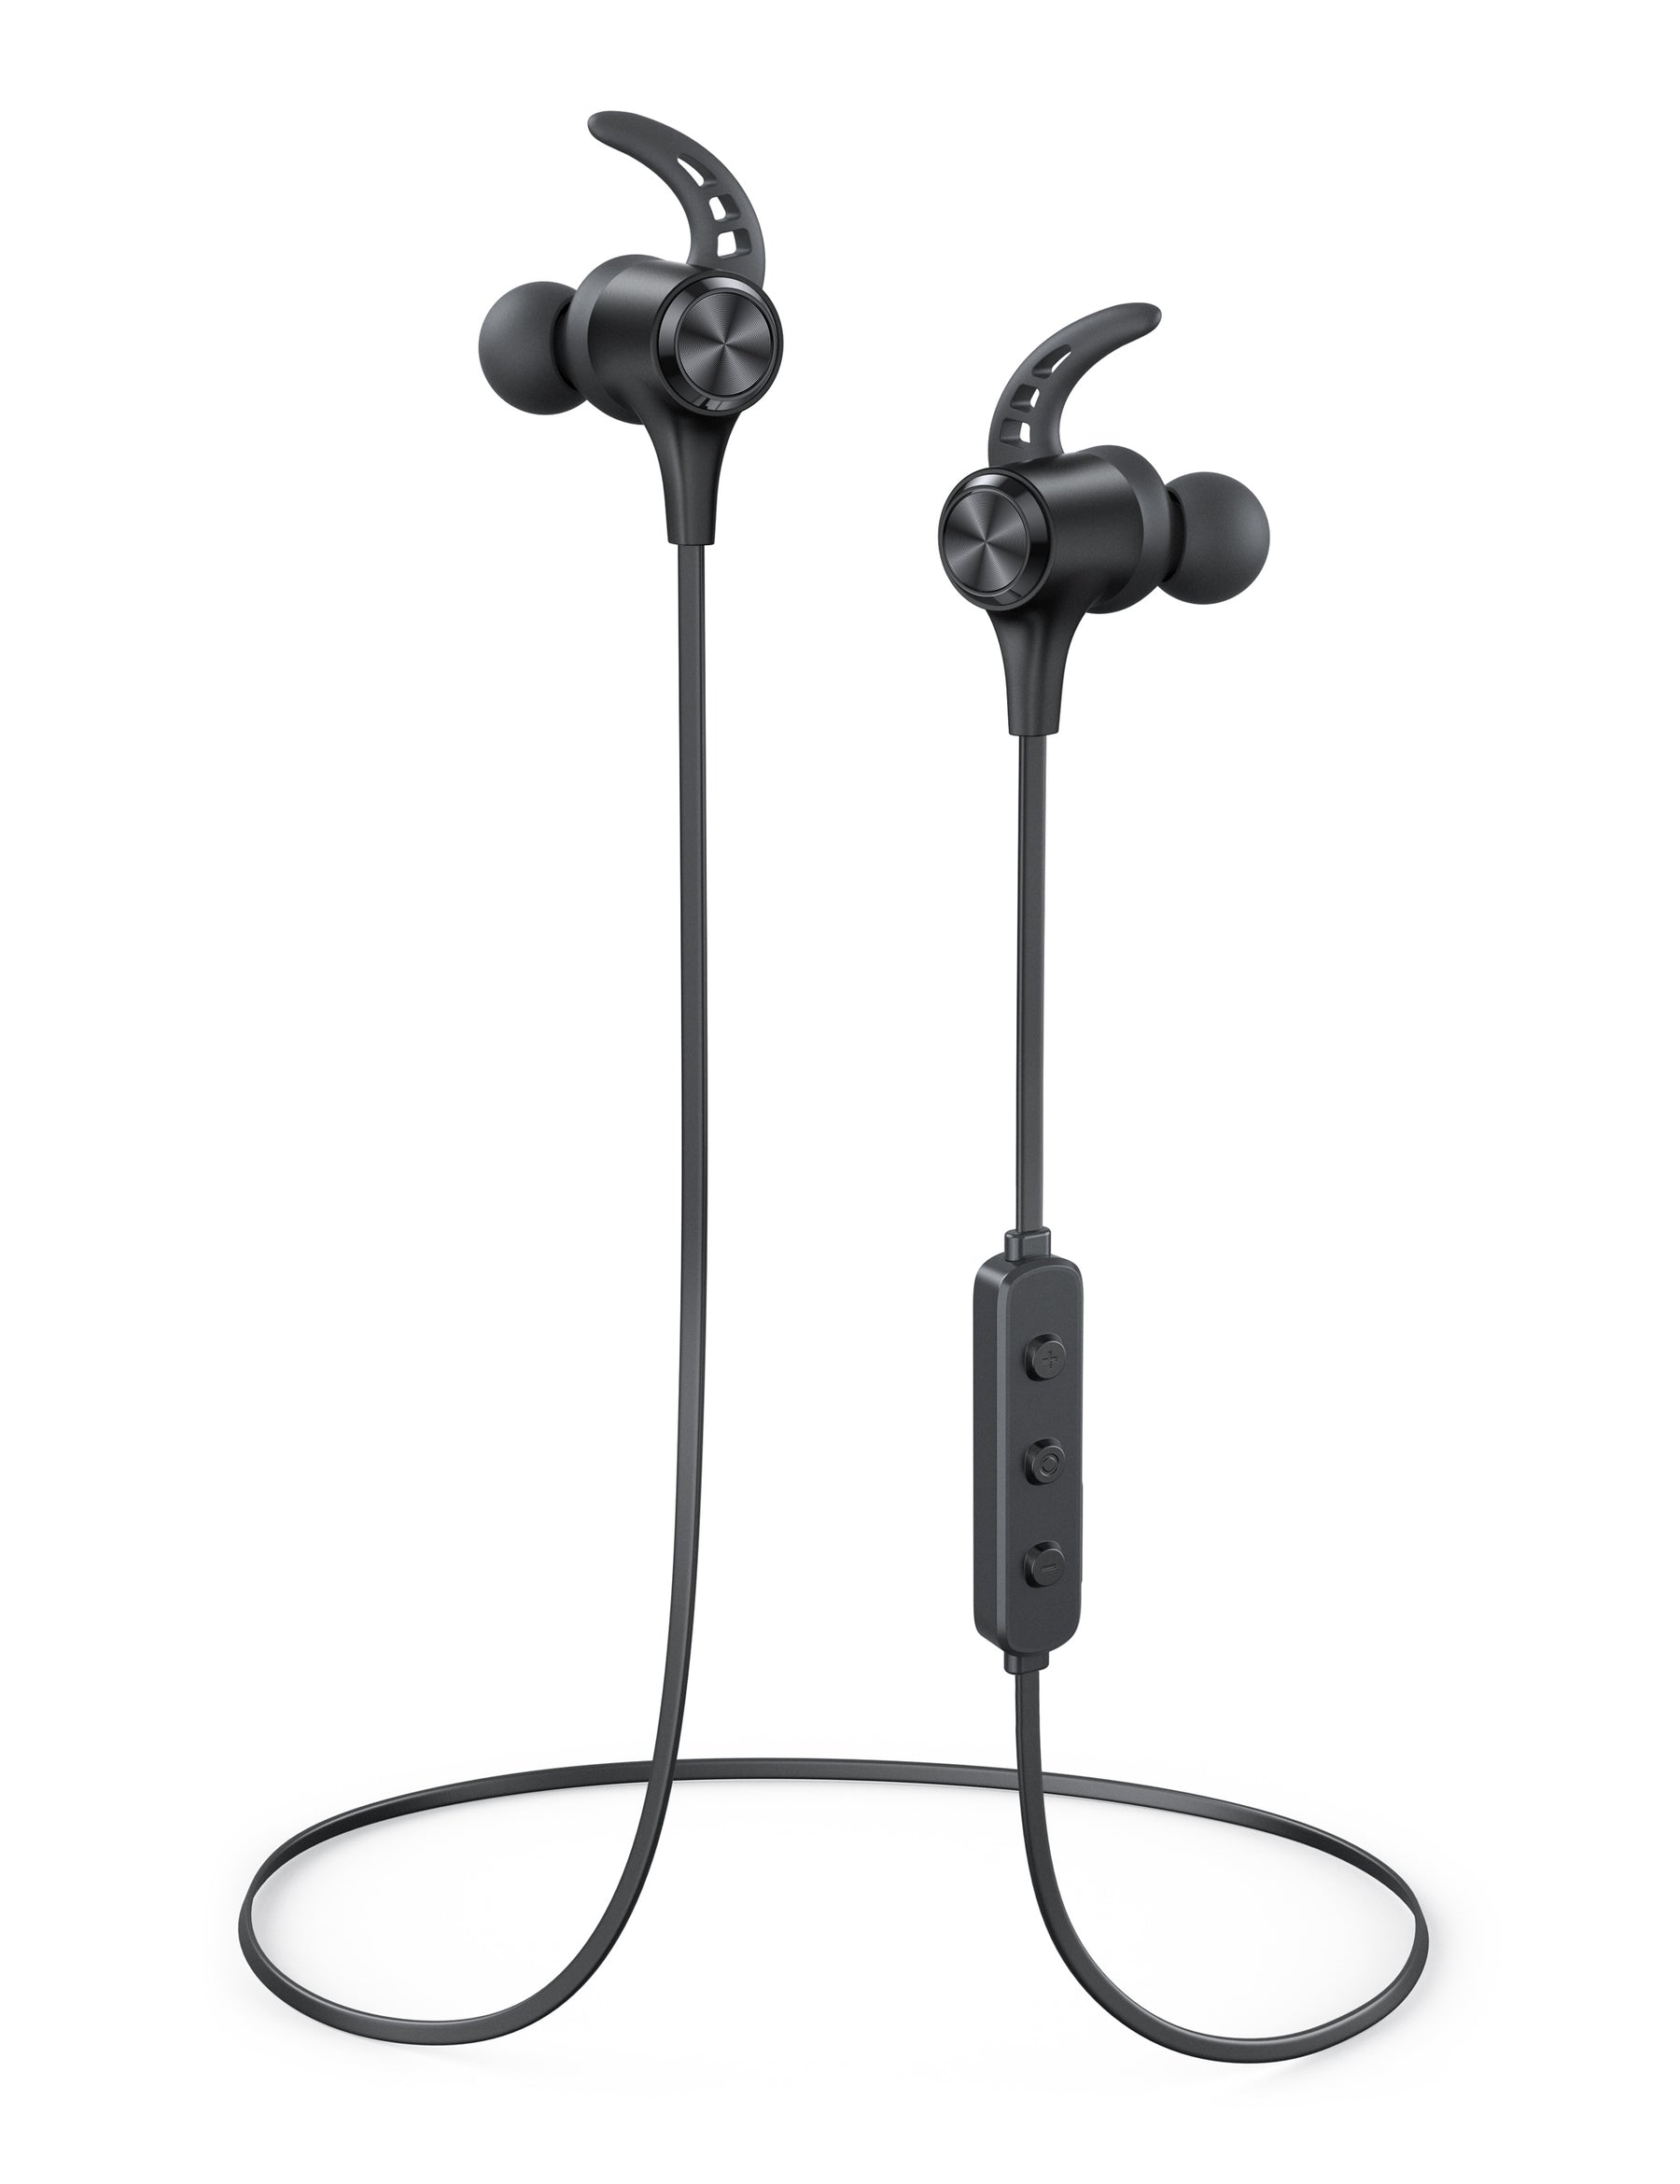 Buy RAVPower Alfox Bluetooth Headphones Stereo Headset for Sport